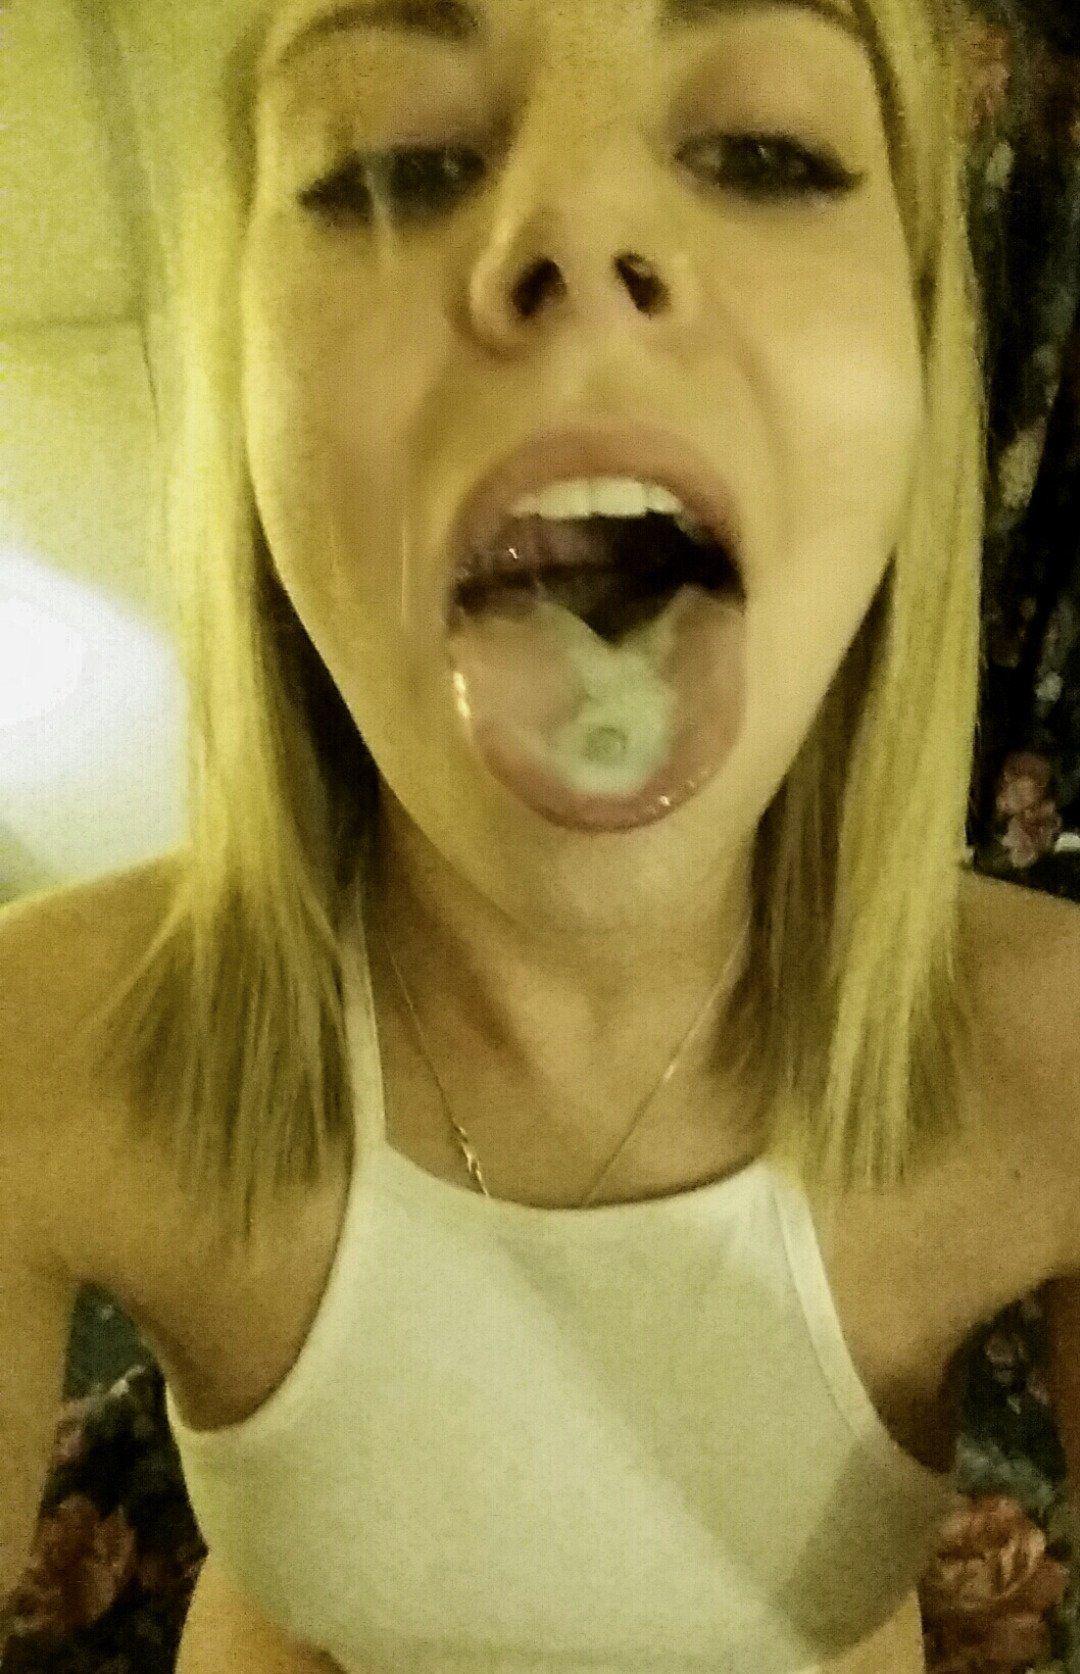 Pierced tongue bj